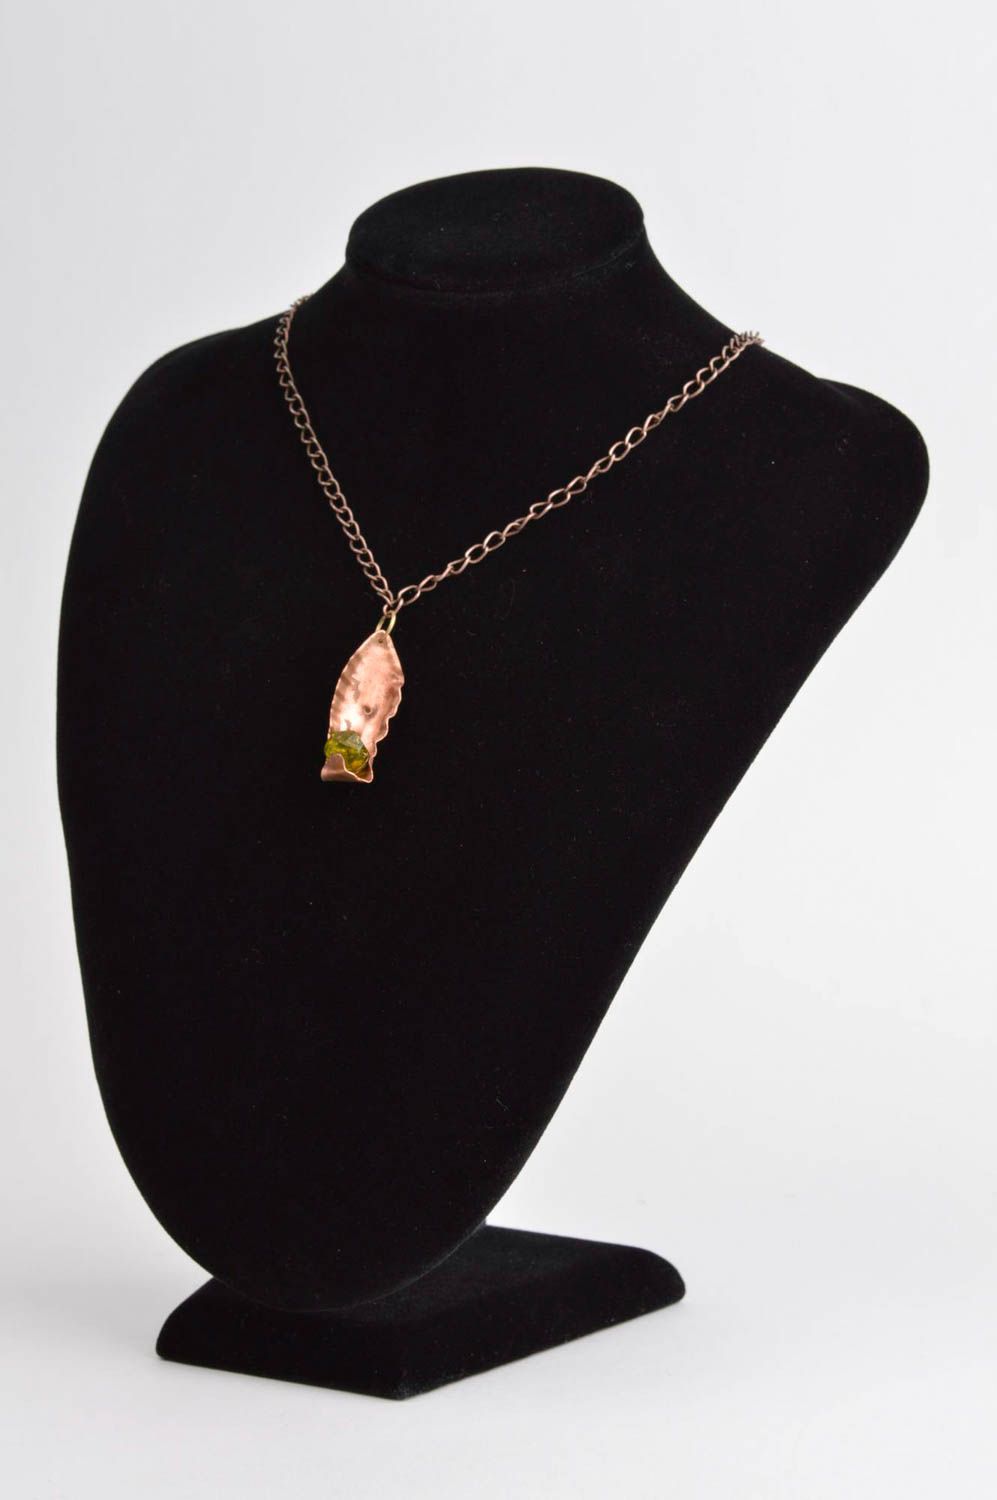 Handmade jewelry unusual neck accessory gift ideas copper pendant for girls photo 1